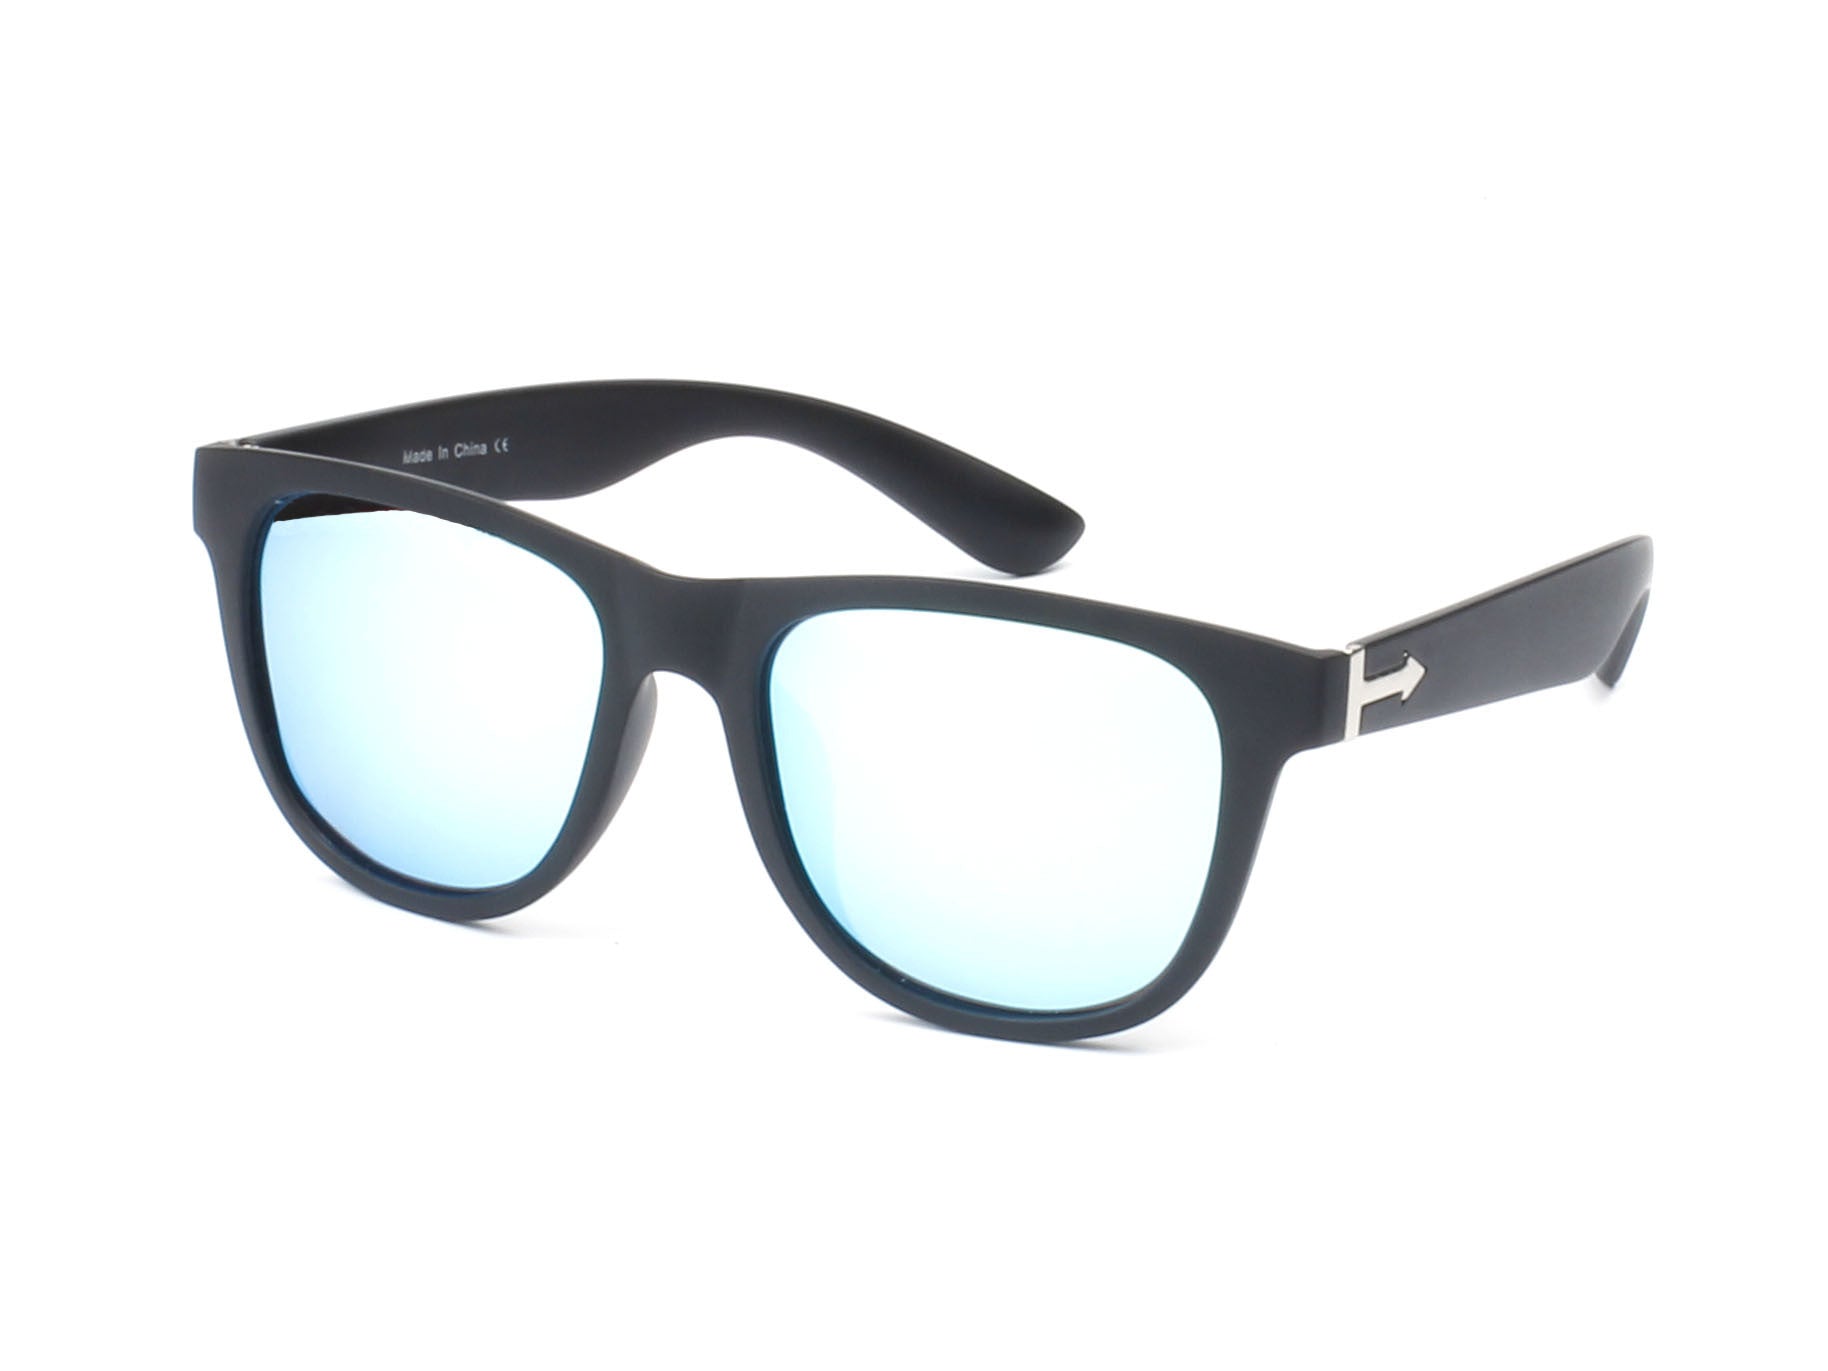 PD02 - Classic Square Retro Polarized Sunglasses Light Blue